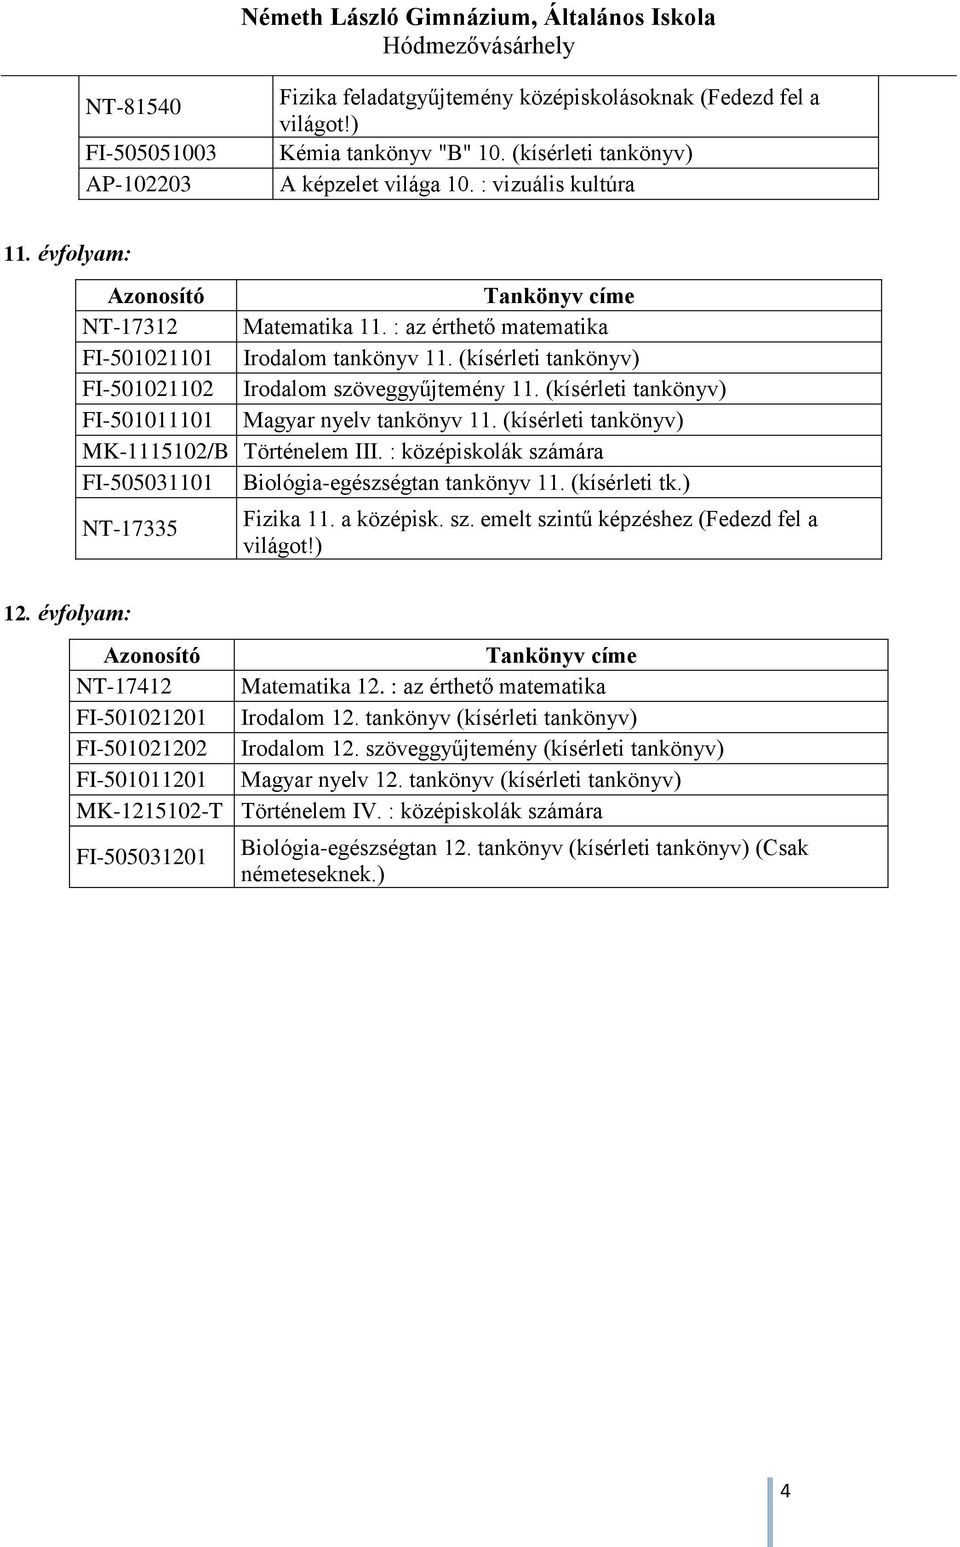 (kísérleti tankönyv) FI-501011101 Magyar nyelv tankönyv 11. (kísérleti tankönyv) MK-1115102/B Történelem III. : középiskolák számára FI-505031101 Biológia-egészségtan tankönyv 11. (kísérleti tk.